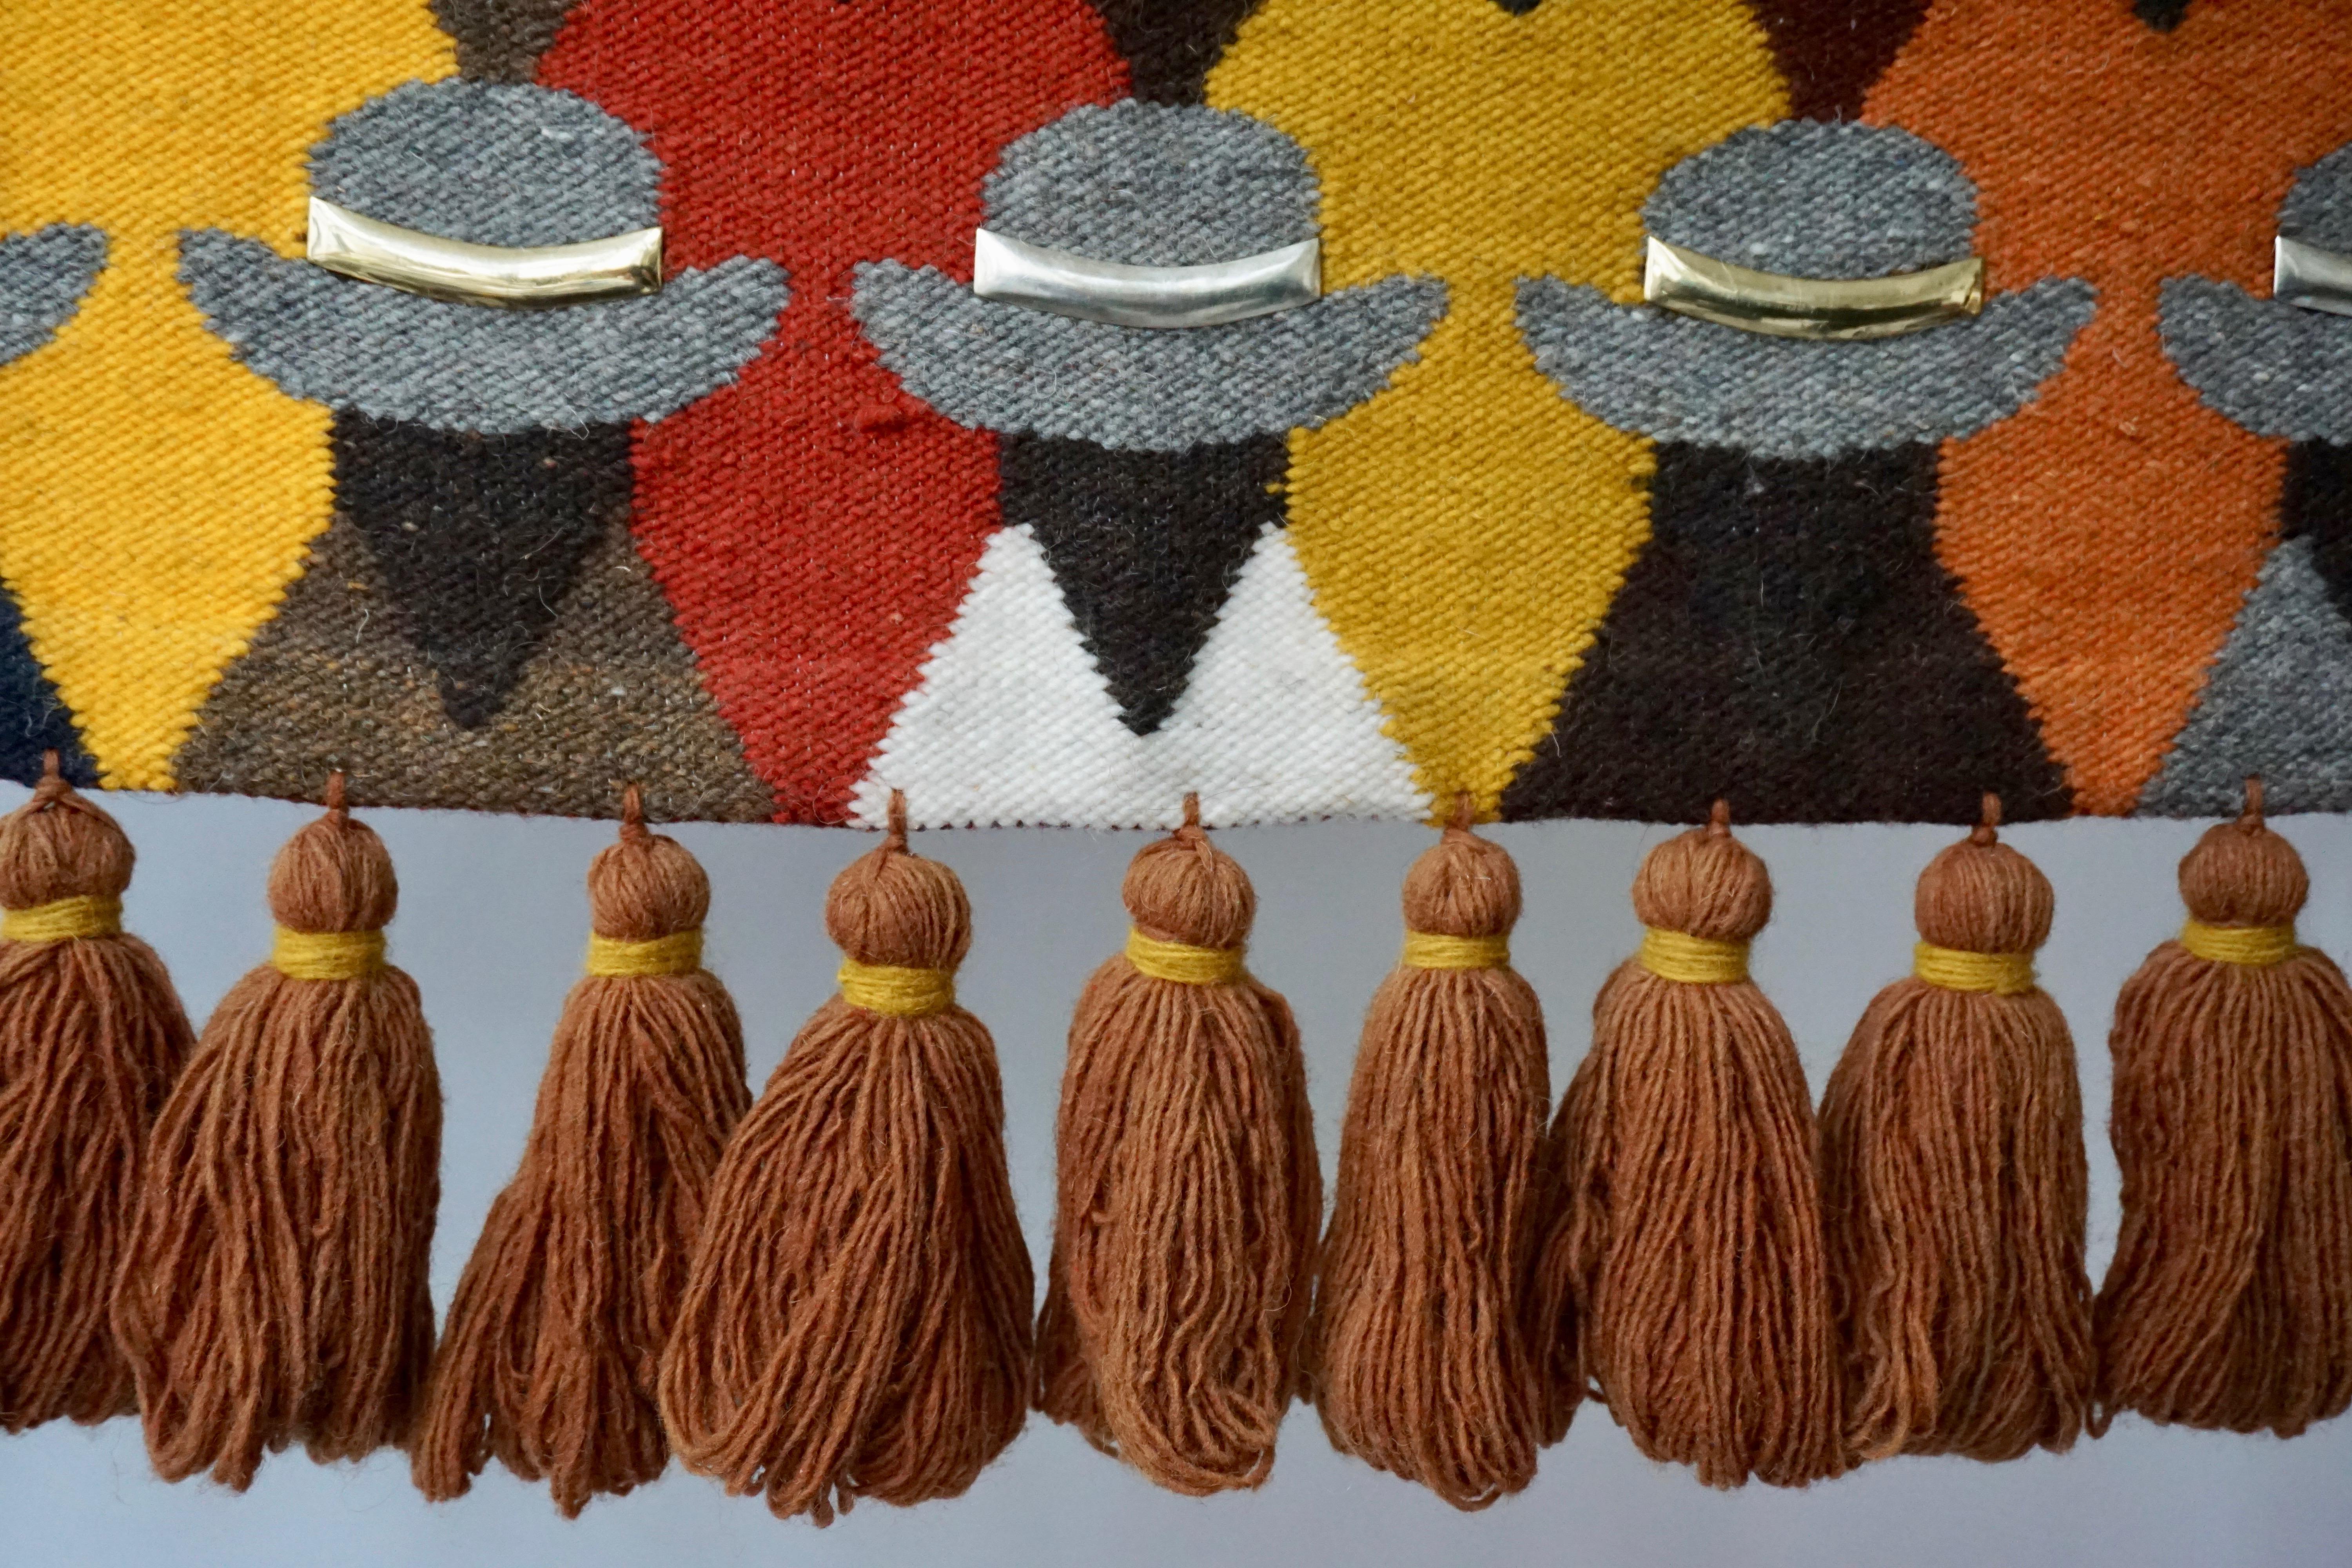 Men in Hats Ecuador Vintage Hand Woven Wool Tapestry